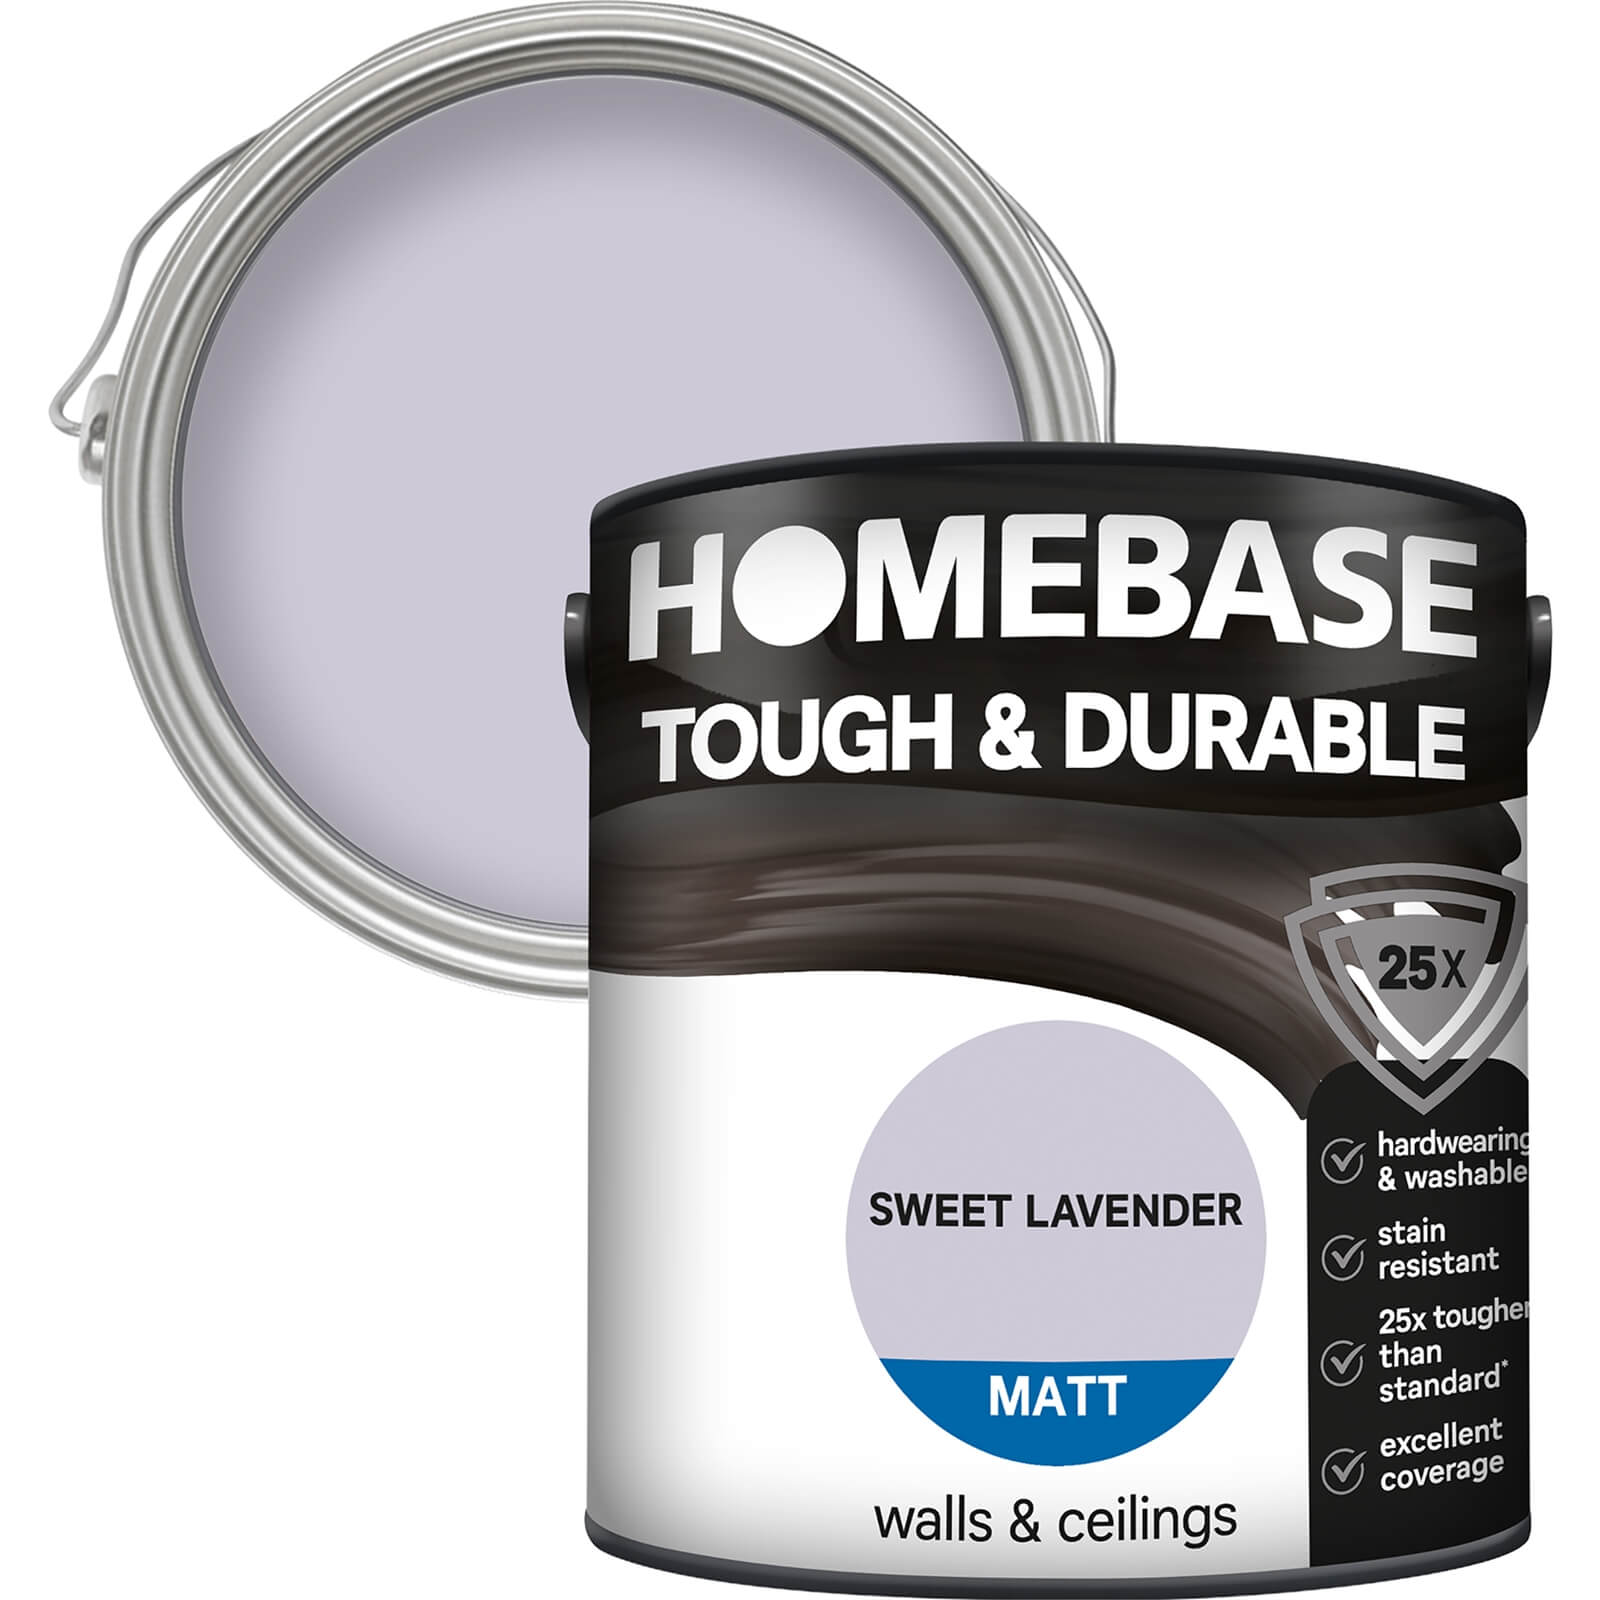 Homebase tough & Durable Matt Paint Sweet Lavender - 2.5L